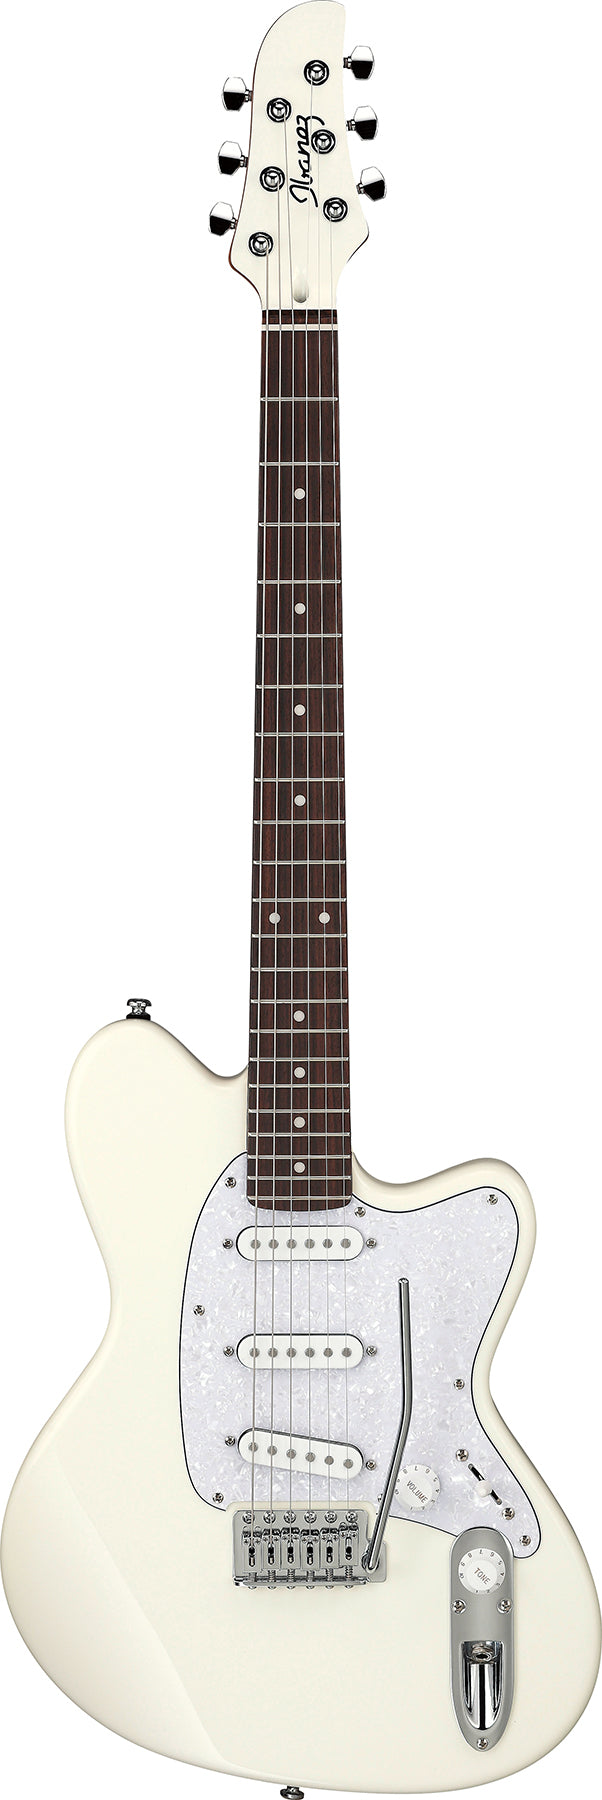 Ibanez ichi00vwh guitare électrique signature ichika nito (blanc vintage)